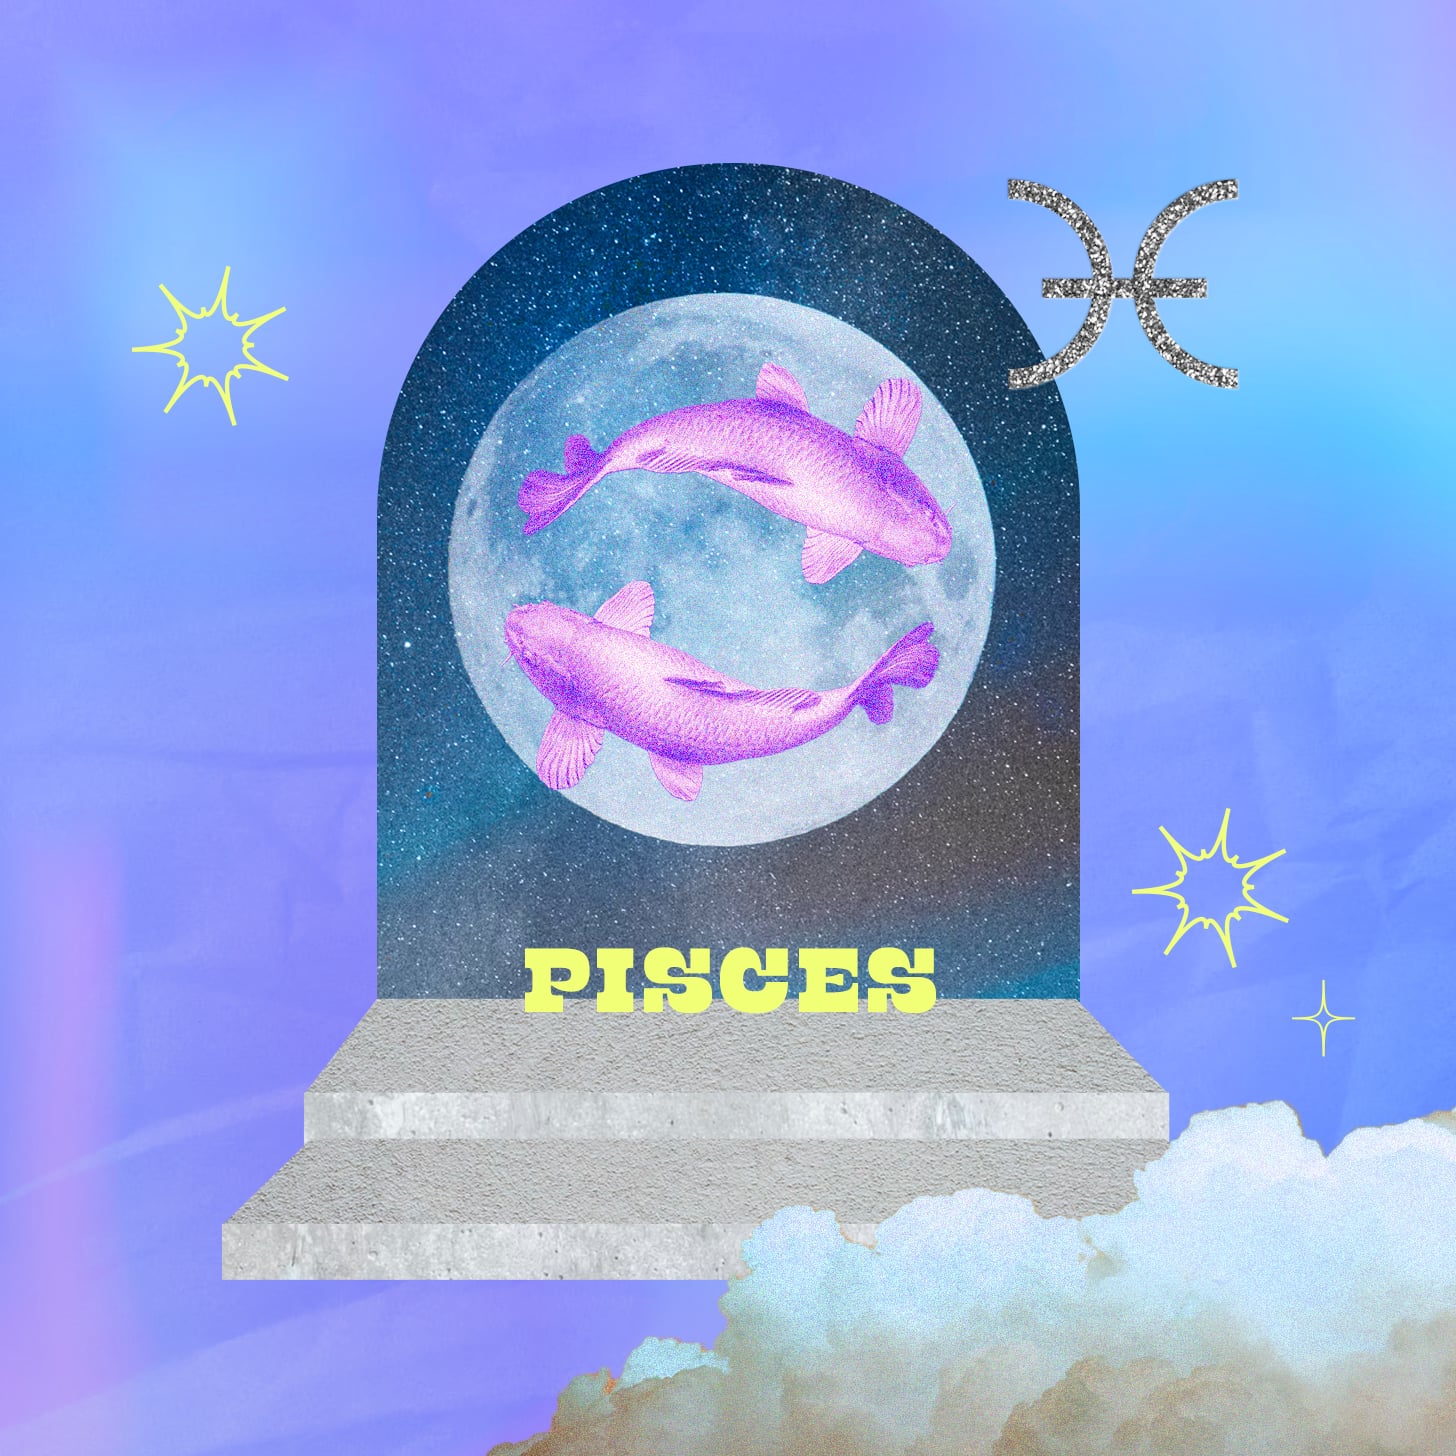 Pisces weekly horoscope for Nov. 27, 2022